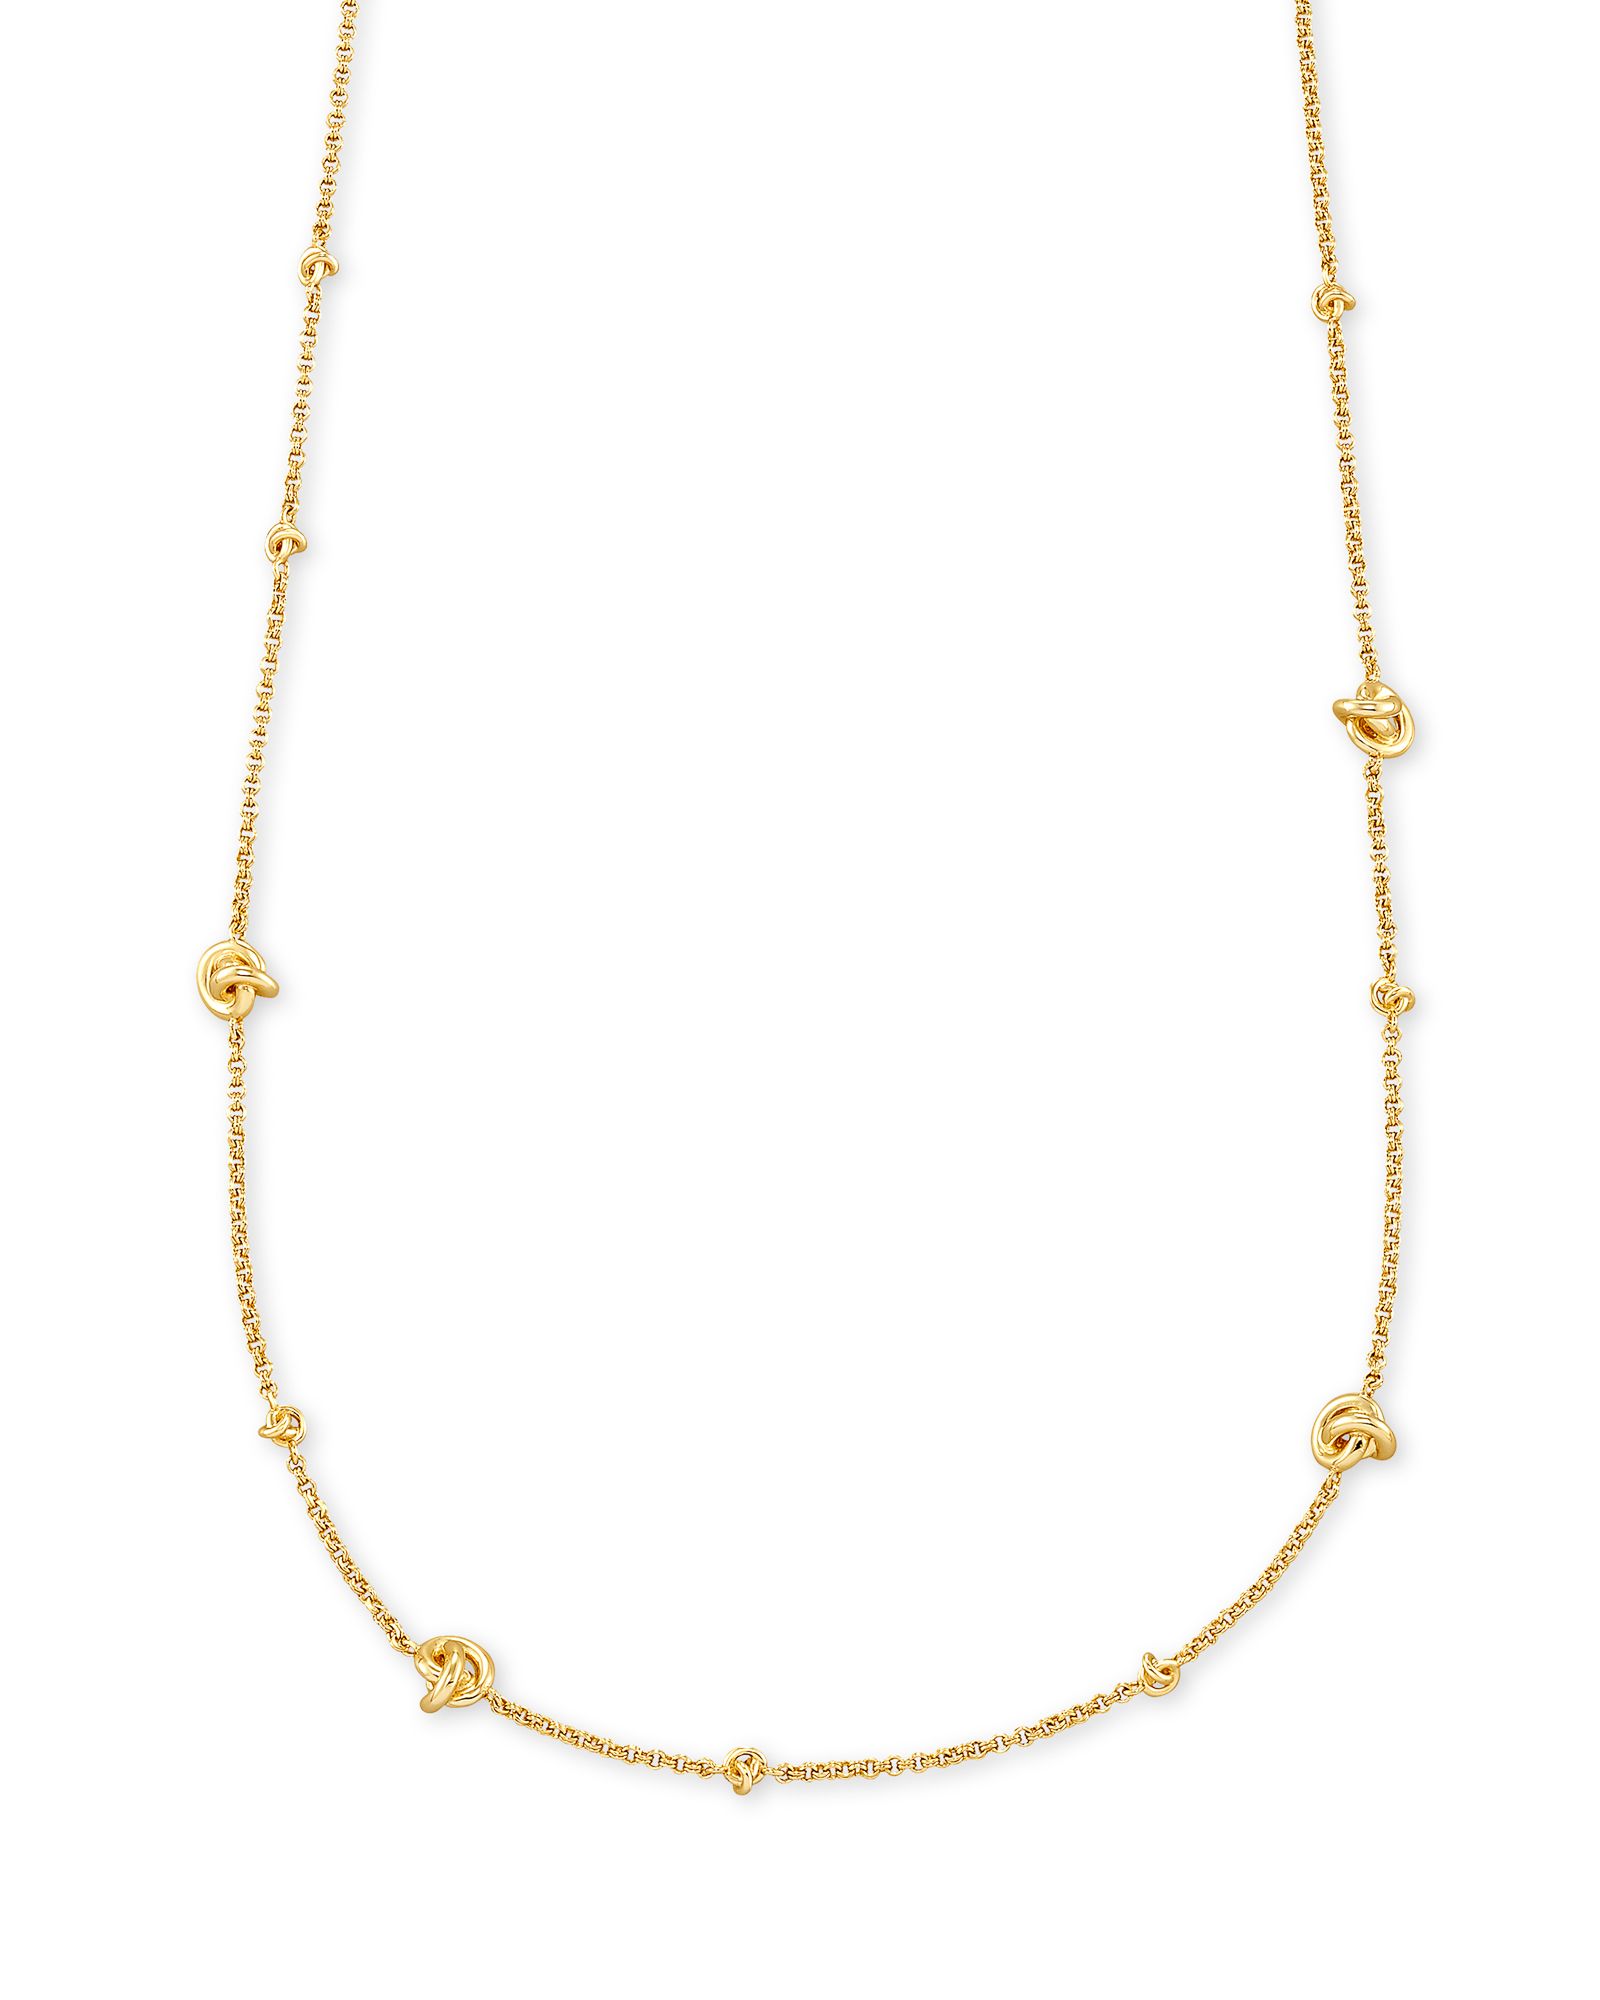 Presleigh Love Knot Adjustable Necklace in Rose Gold | Kendra Scott